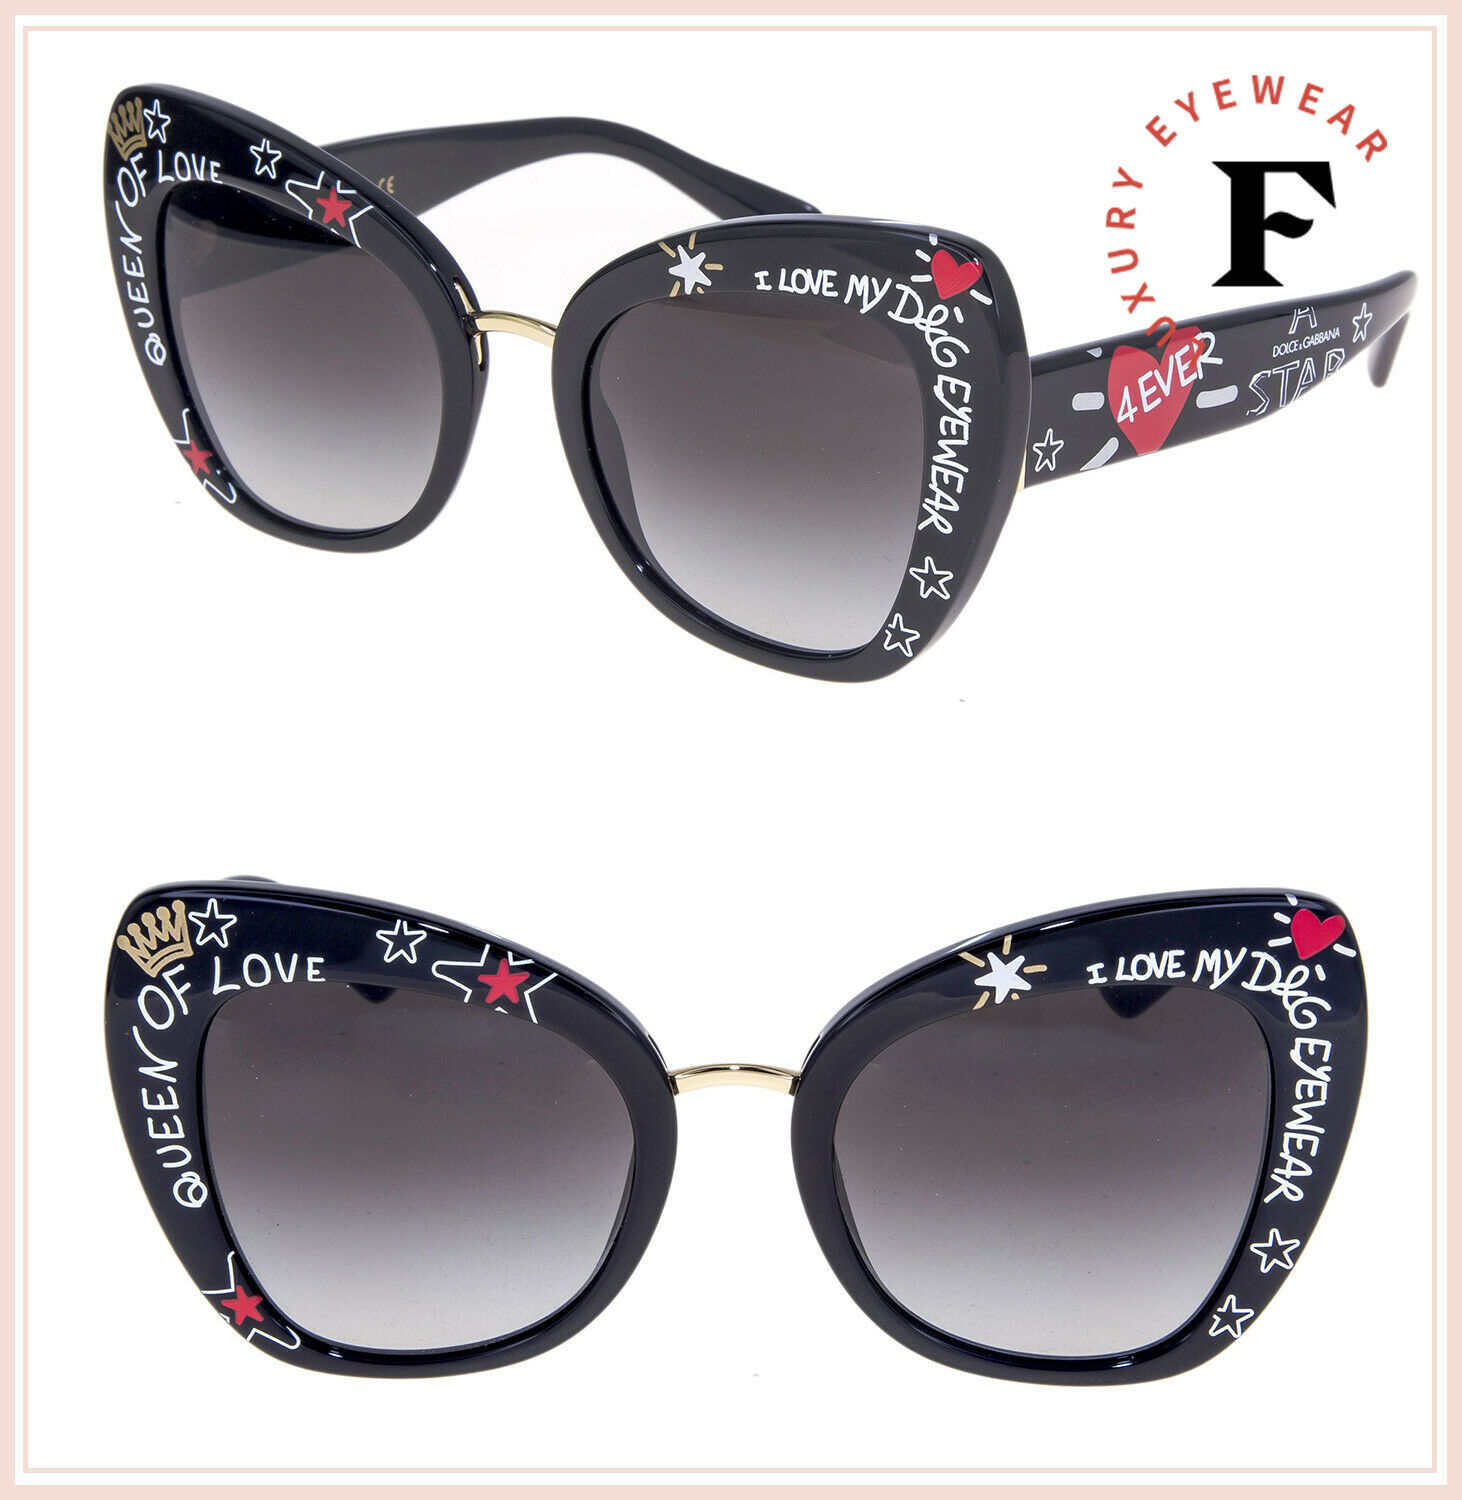 dolce gabbana queen of love sunglasses